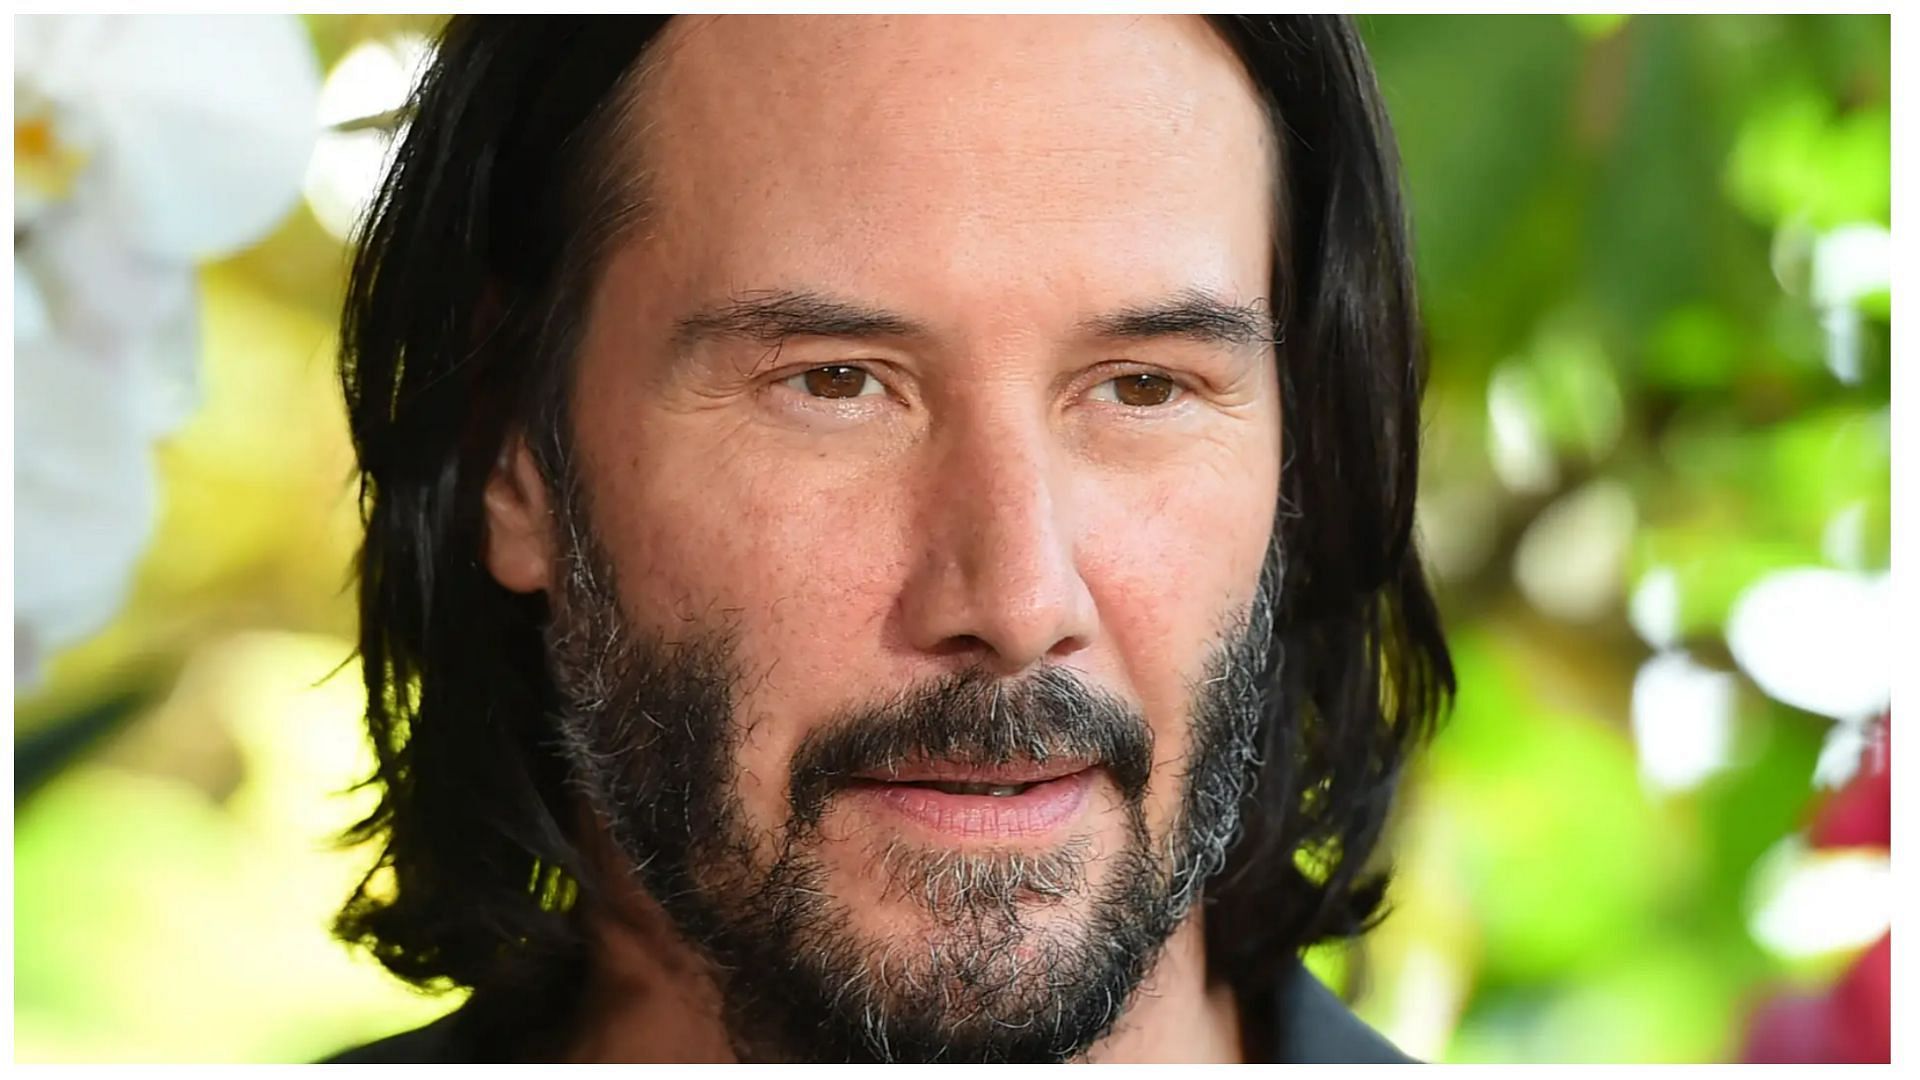 Keanu Reeves deepfake goes viral on TikTok (image via AP photos/Jordan Strauss)